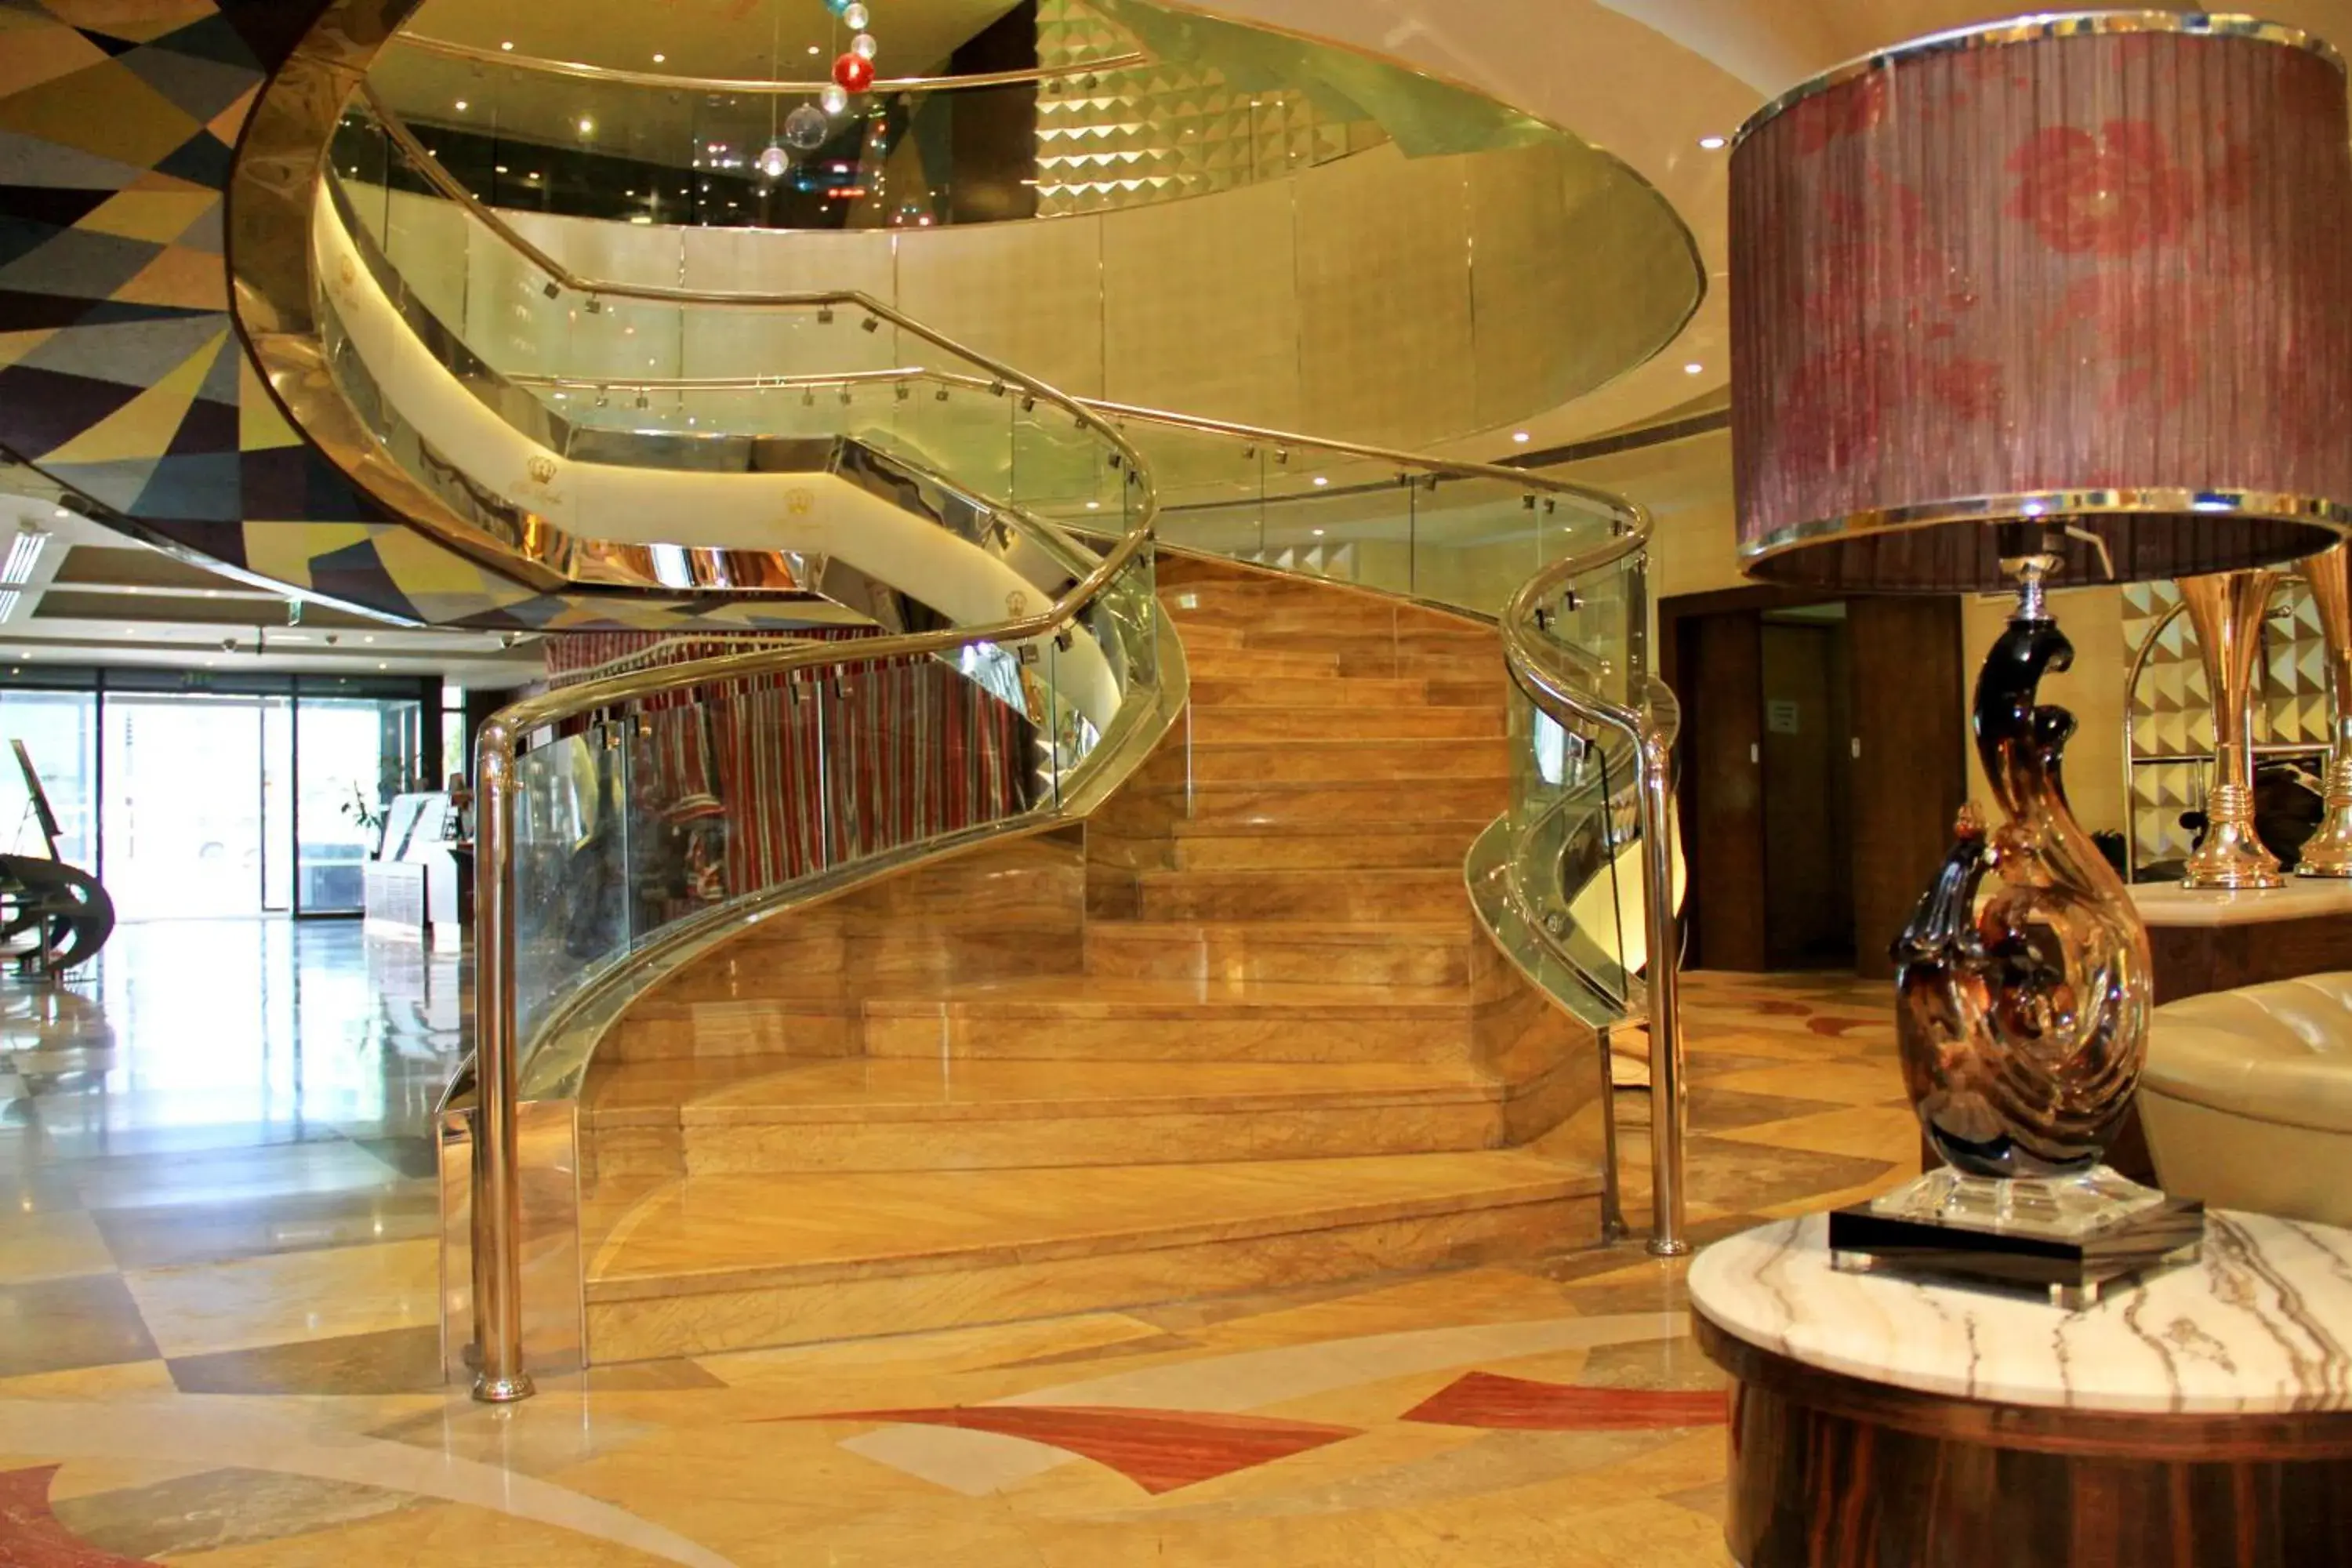 Lobby or reception in The leela Hotel